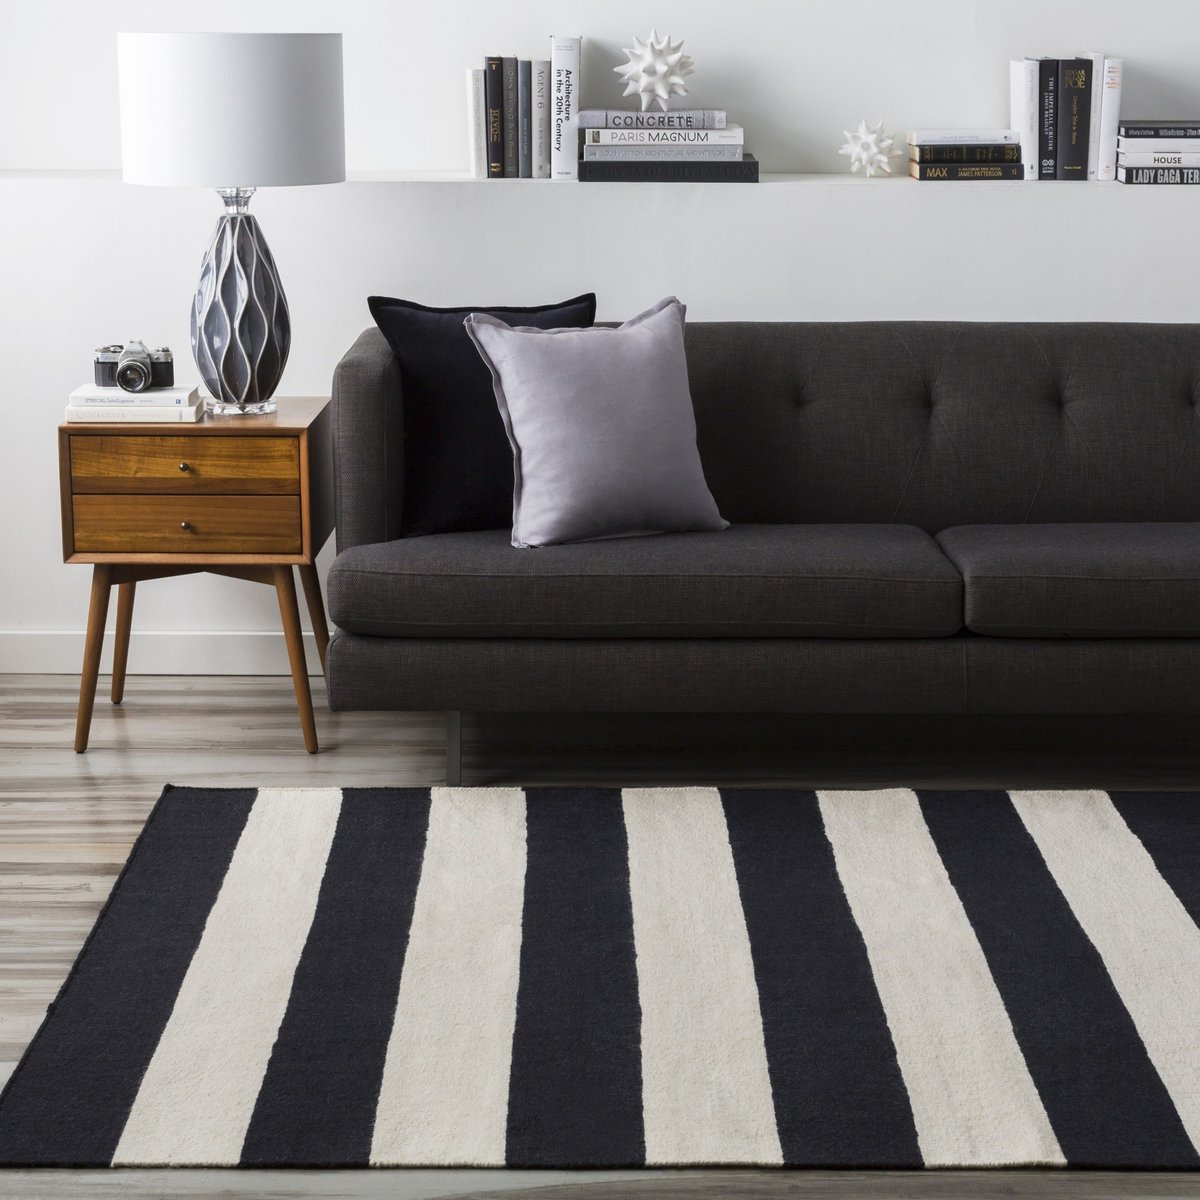 Bold Strokes  - Black and White Living Room Design Advice